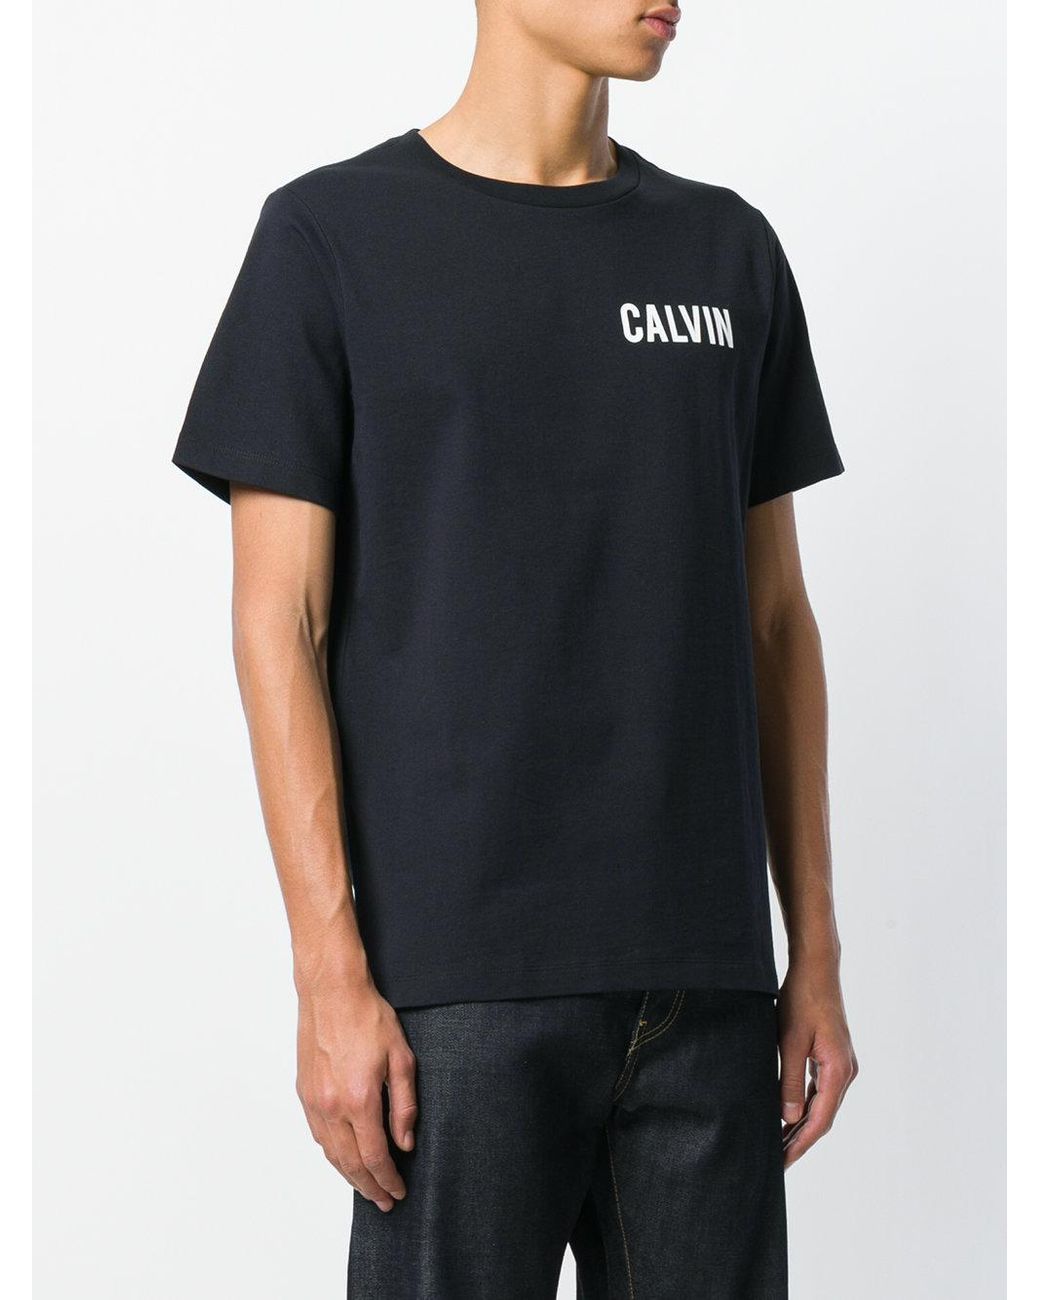 Calvin Klein Cotton Hardcore T-shirt in Black for Men | Lyst